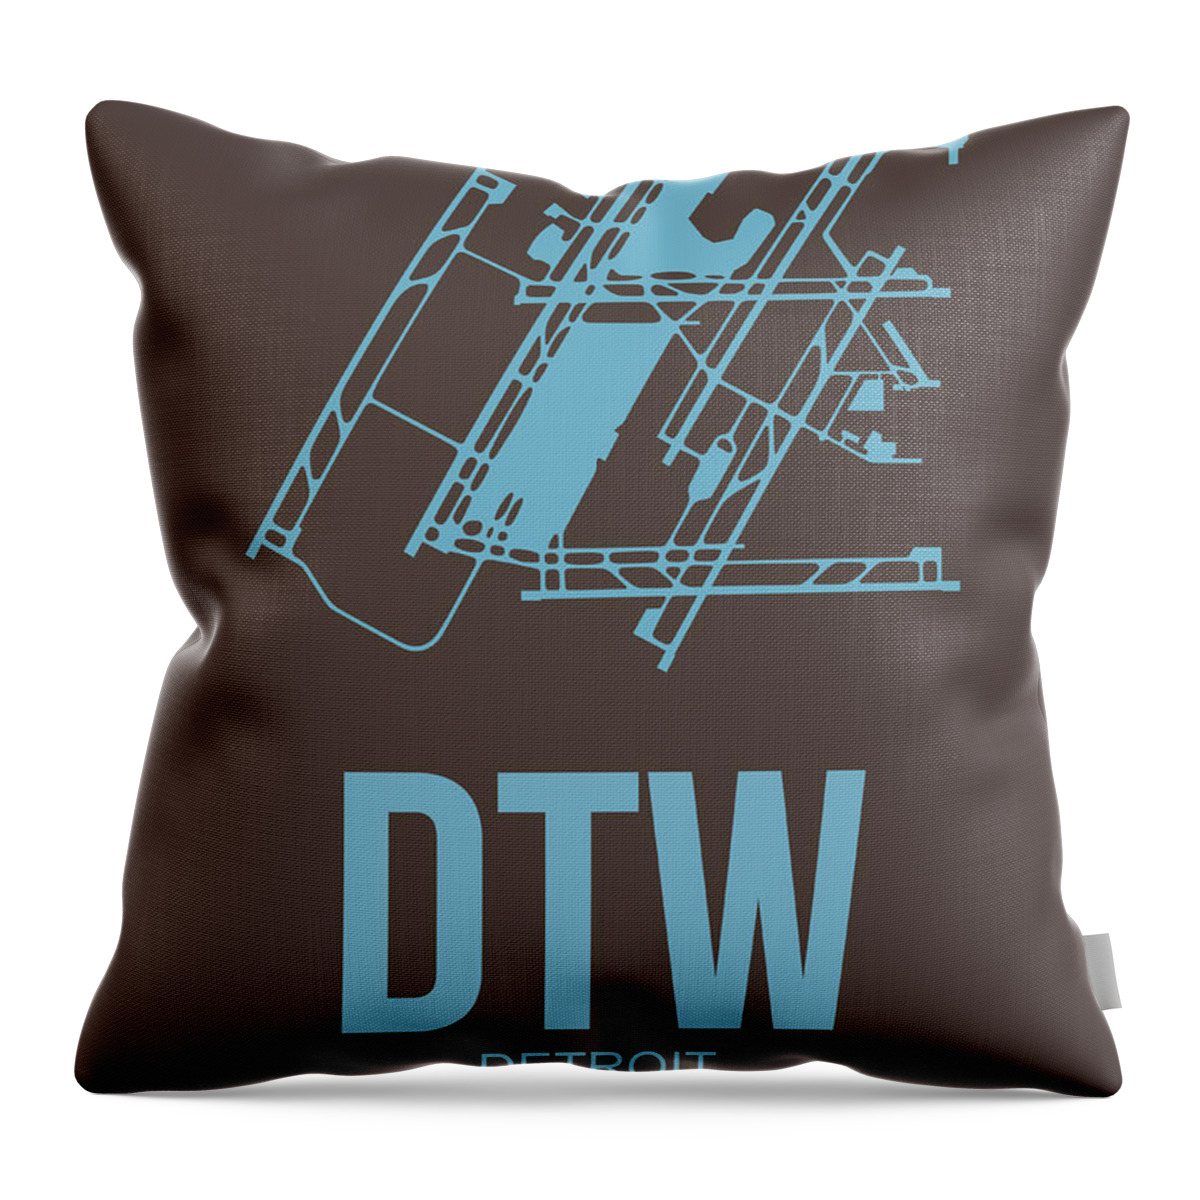 Detroit Throw Pillow featuring the digital art DTW Detroit Airport Poster 1 by Naxart Studio